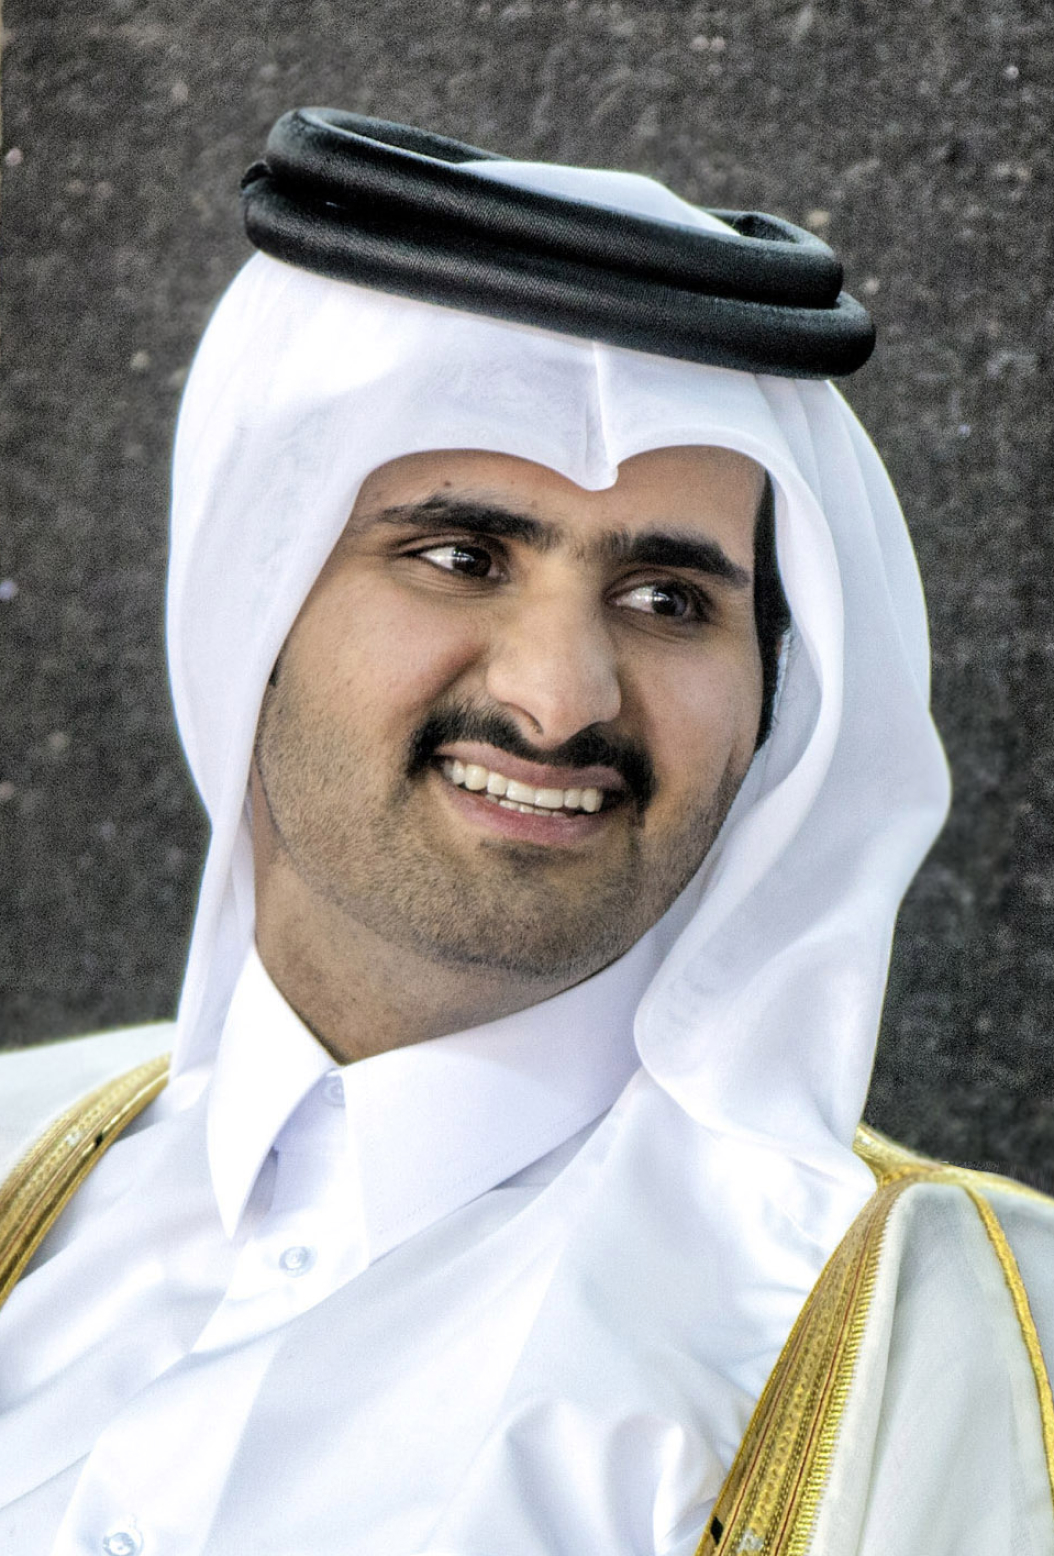 His Highness Sheikh Abdullah bin Hamad Al Thani, the Deputy Amir of the State of Qatar